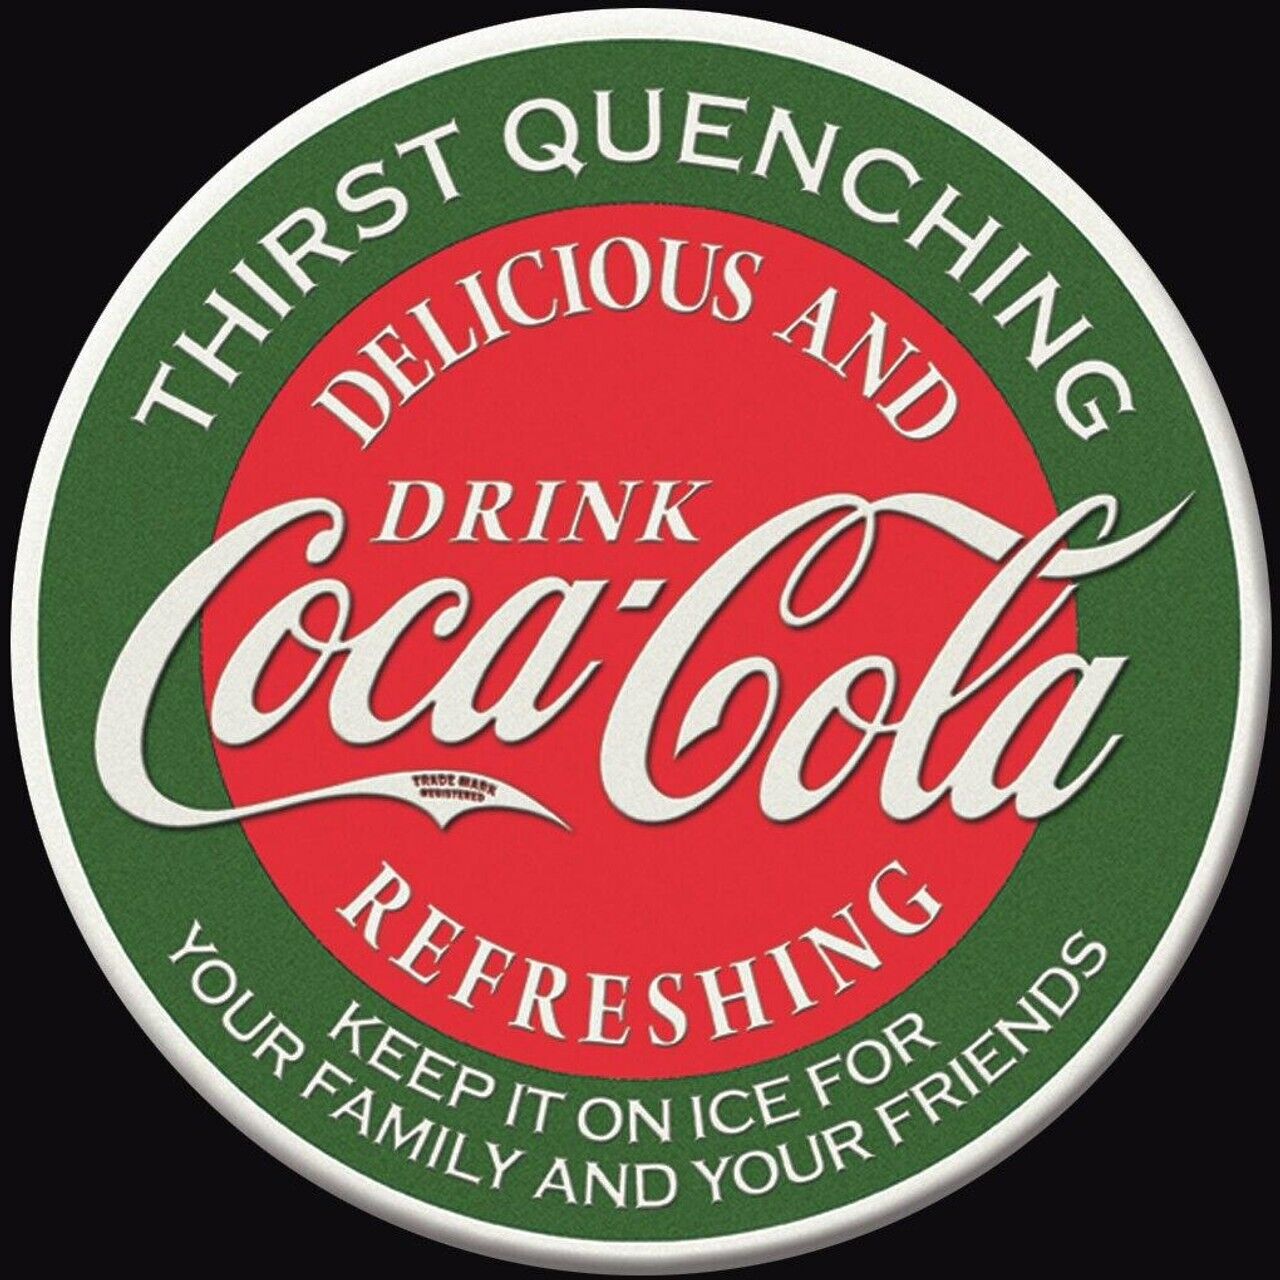 Coca Cola Thirst Quenching Round Sign Refrigerator Magnet Decor 3 Inch Diameter 